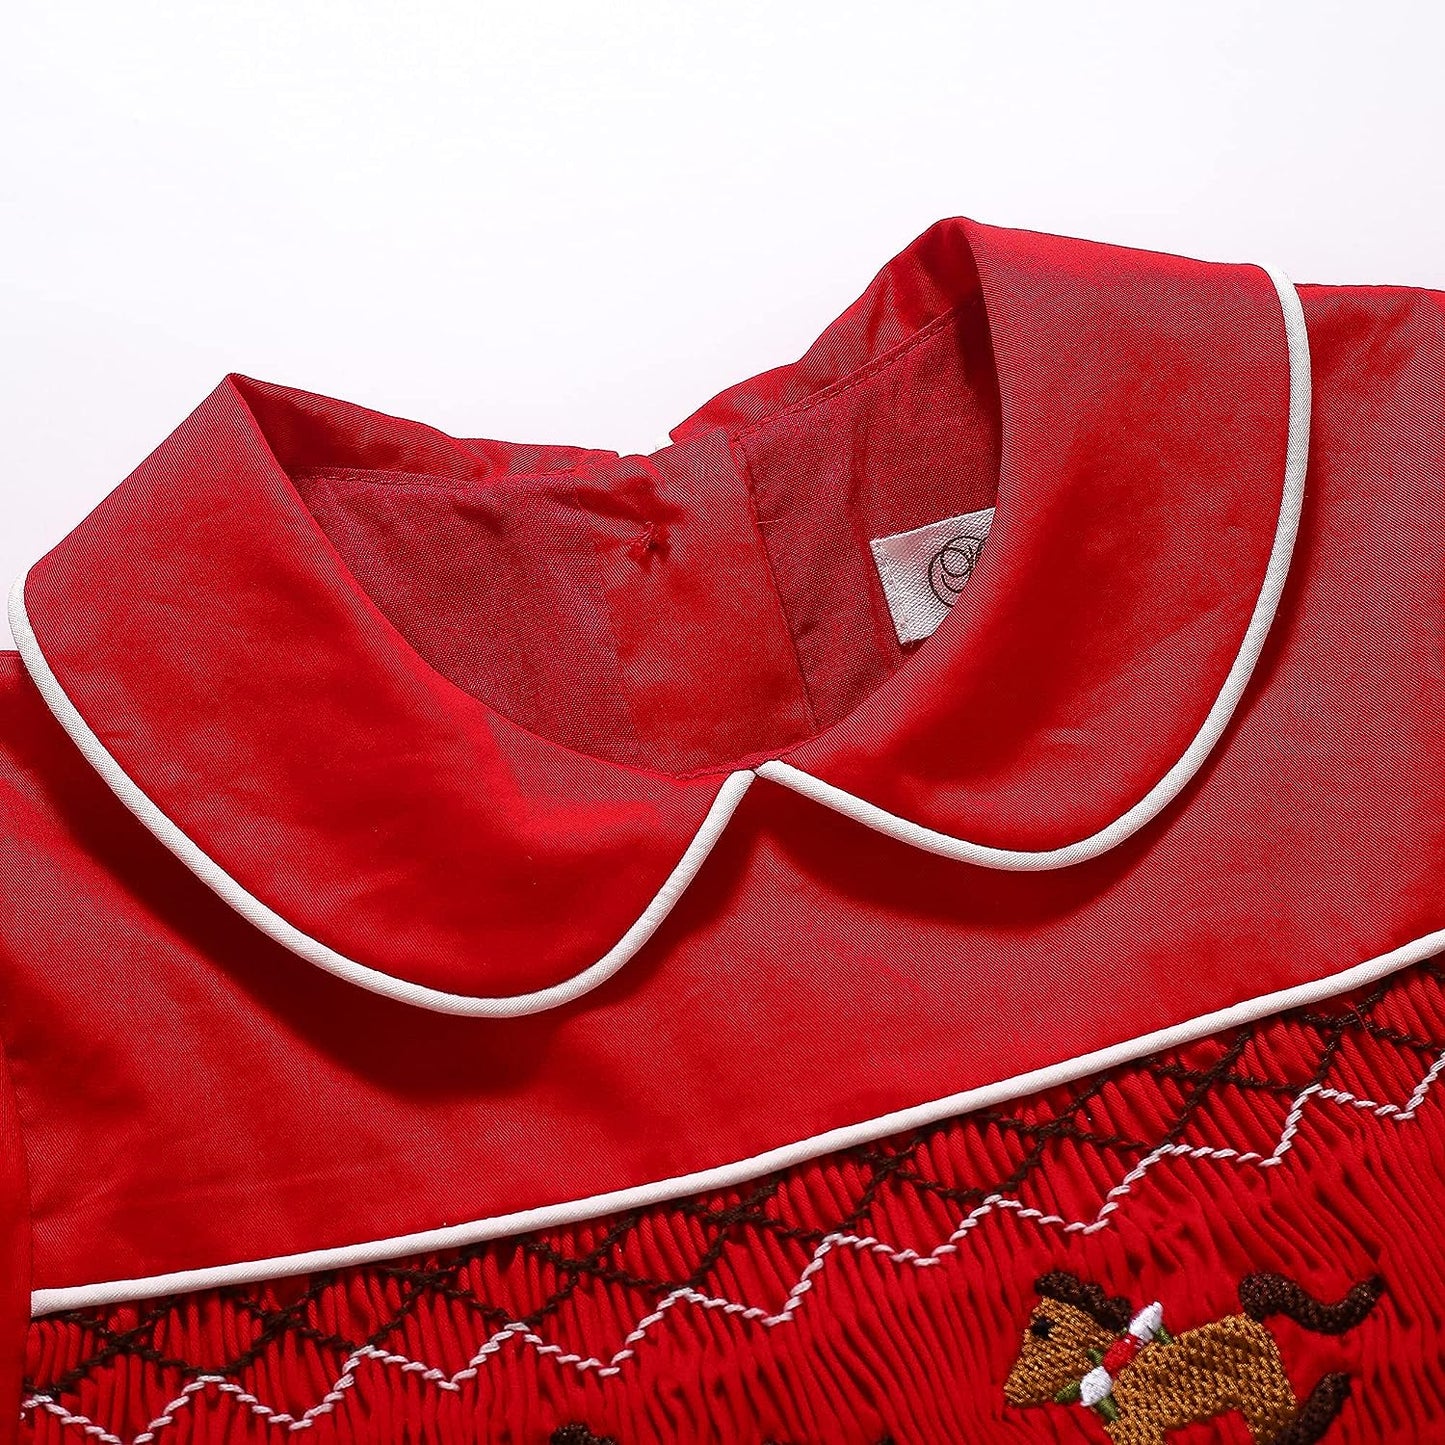 Red Embroidered Hand smocked Christmas Dress